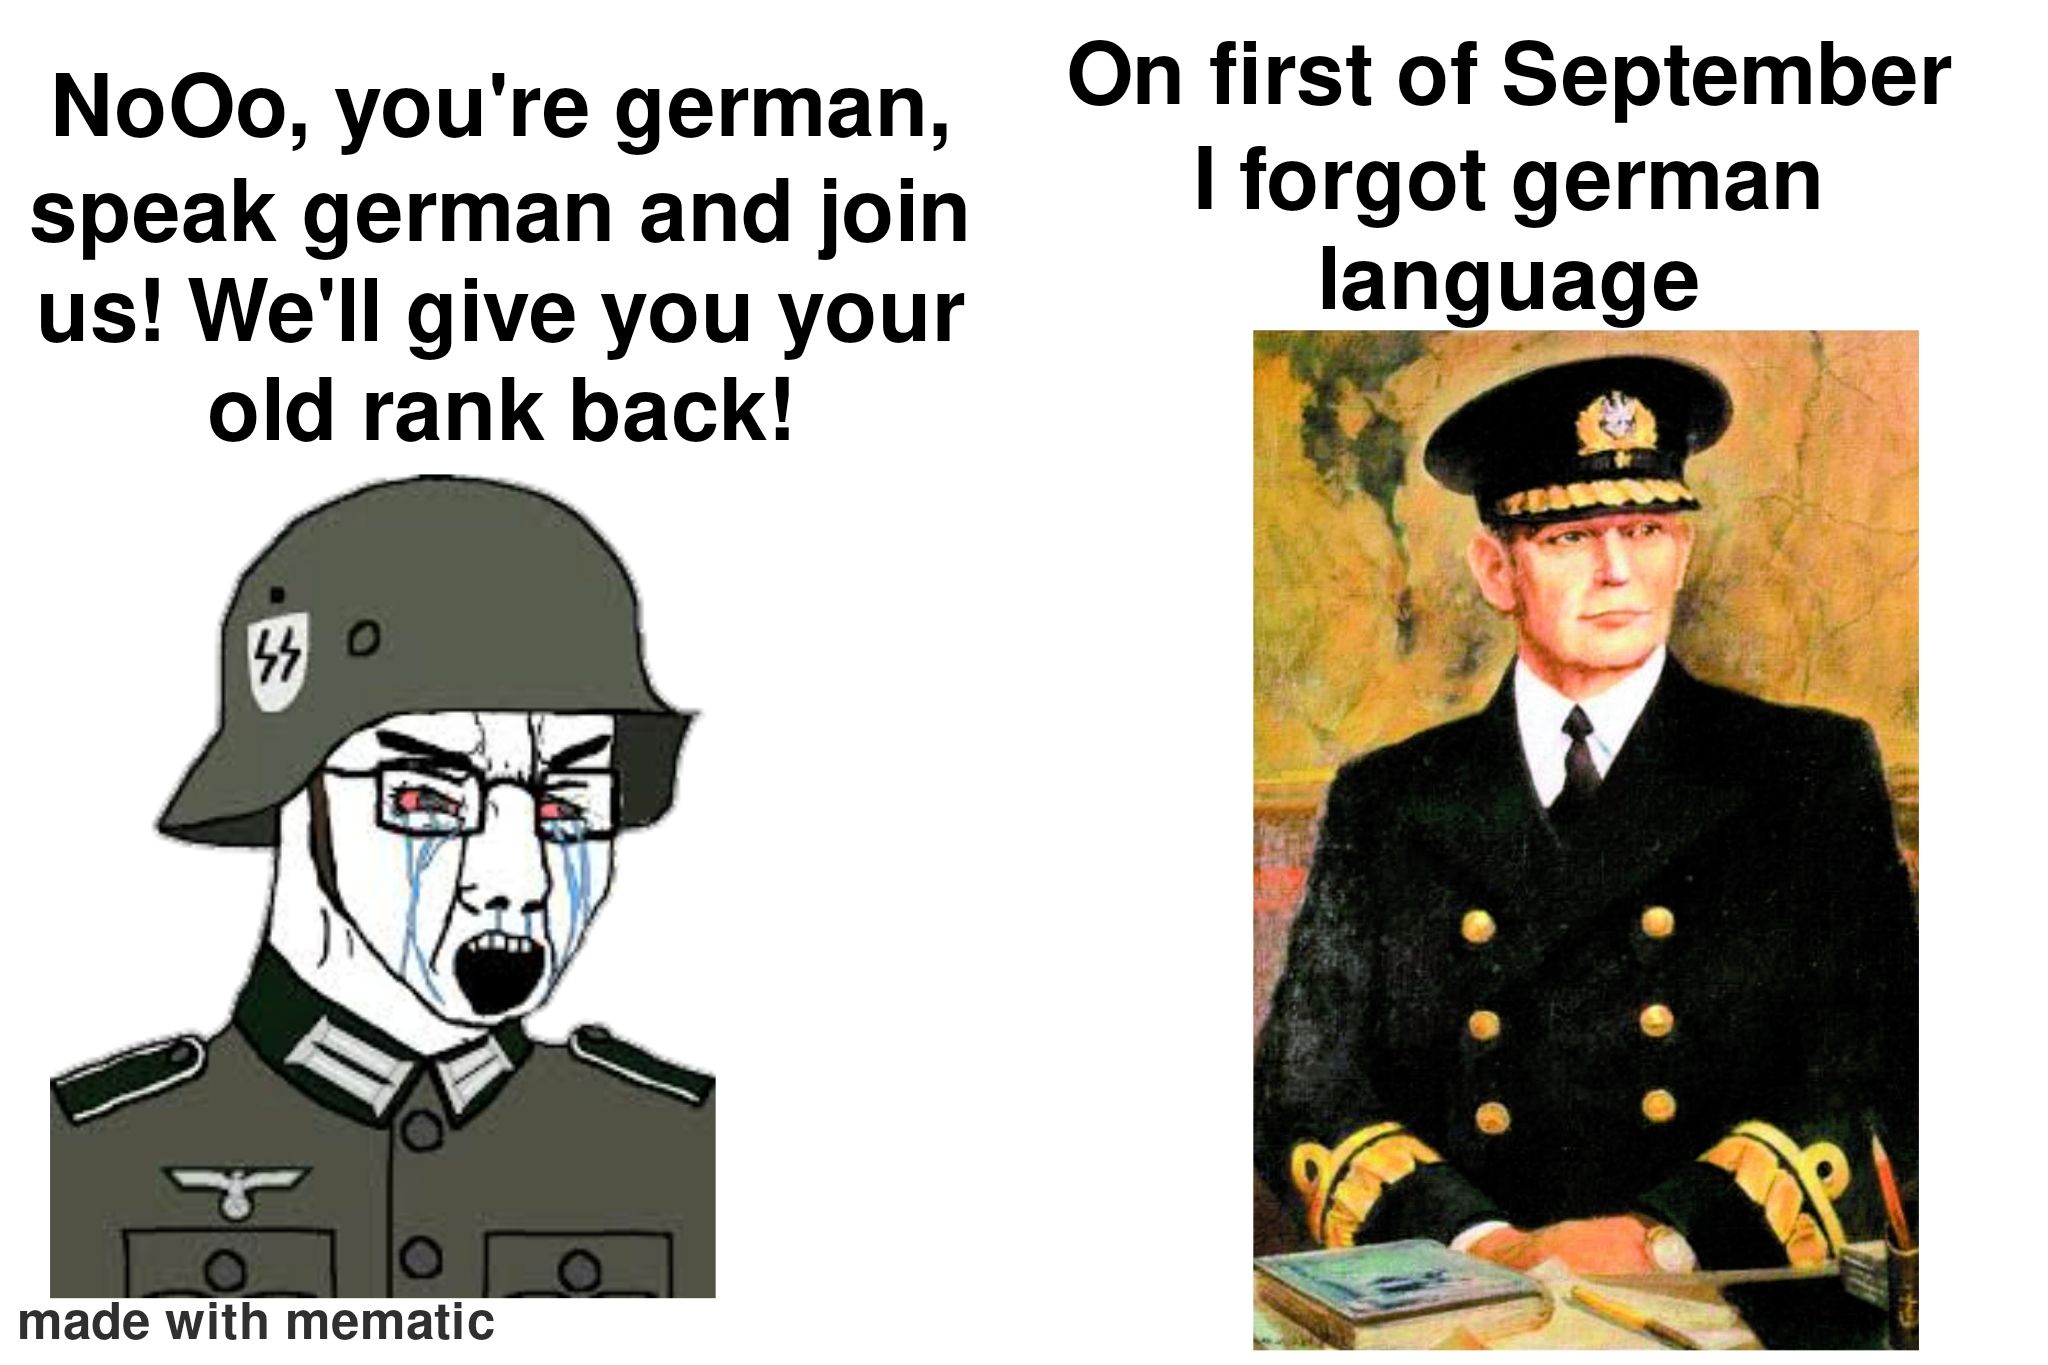 He was native German speaker, btw